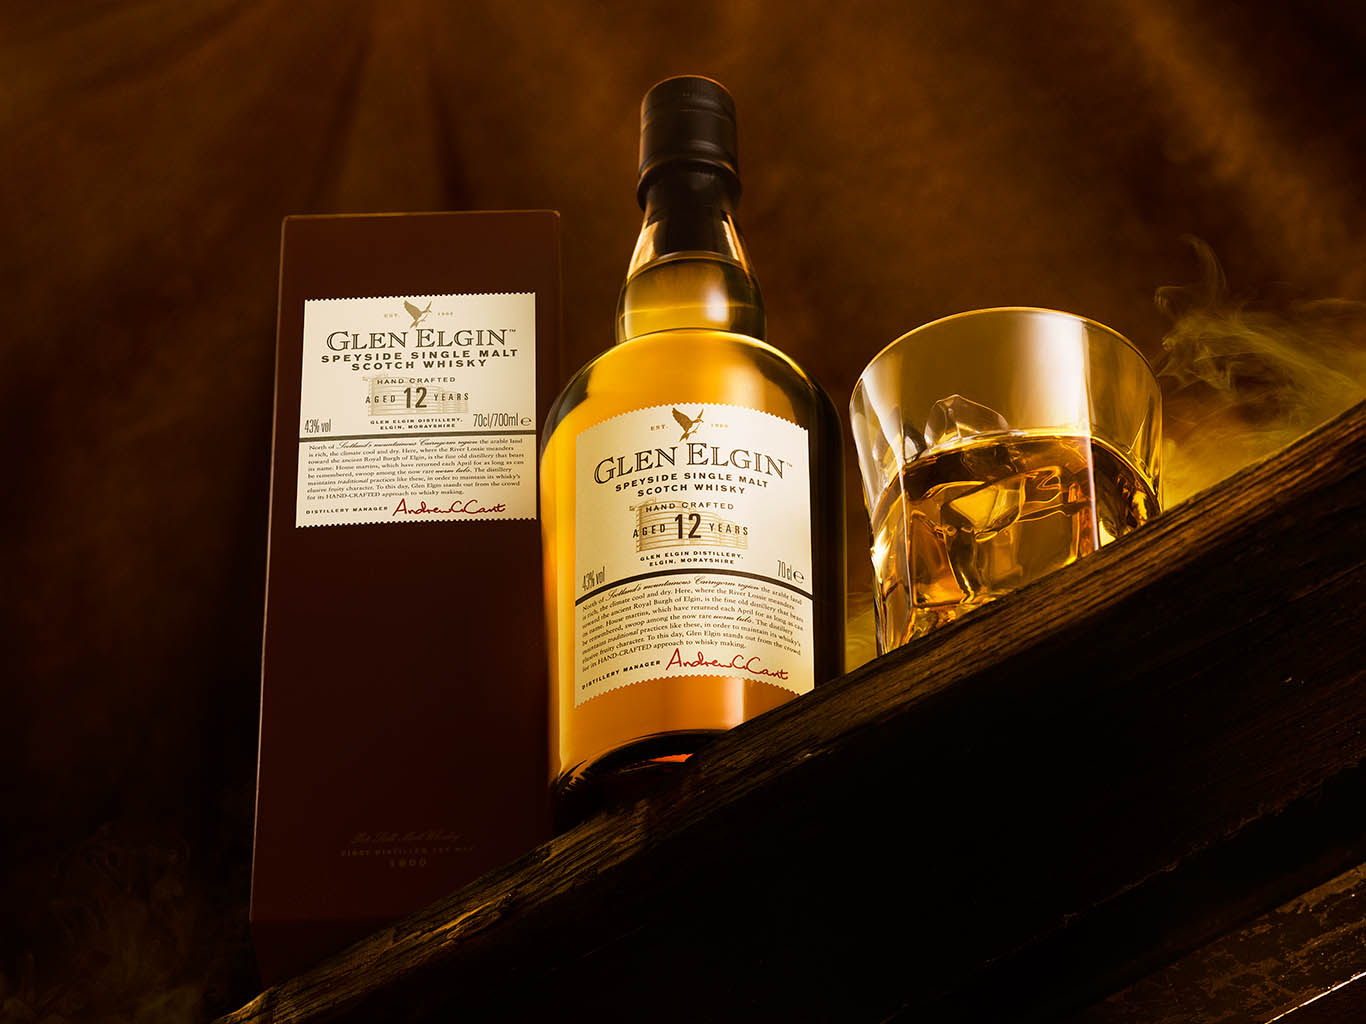 Drinks Photography of Glen Elgin whisky bottle and serve by Packshot Factory